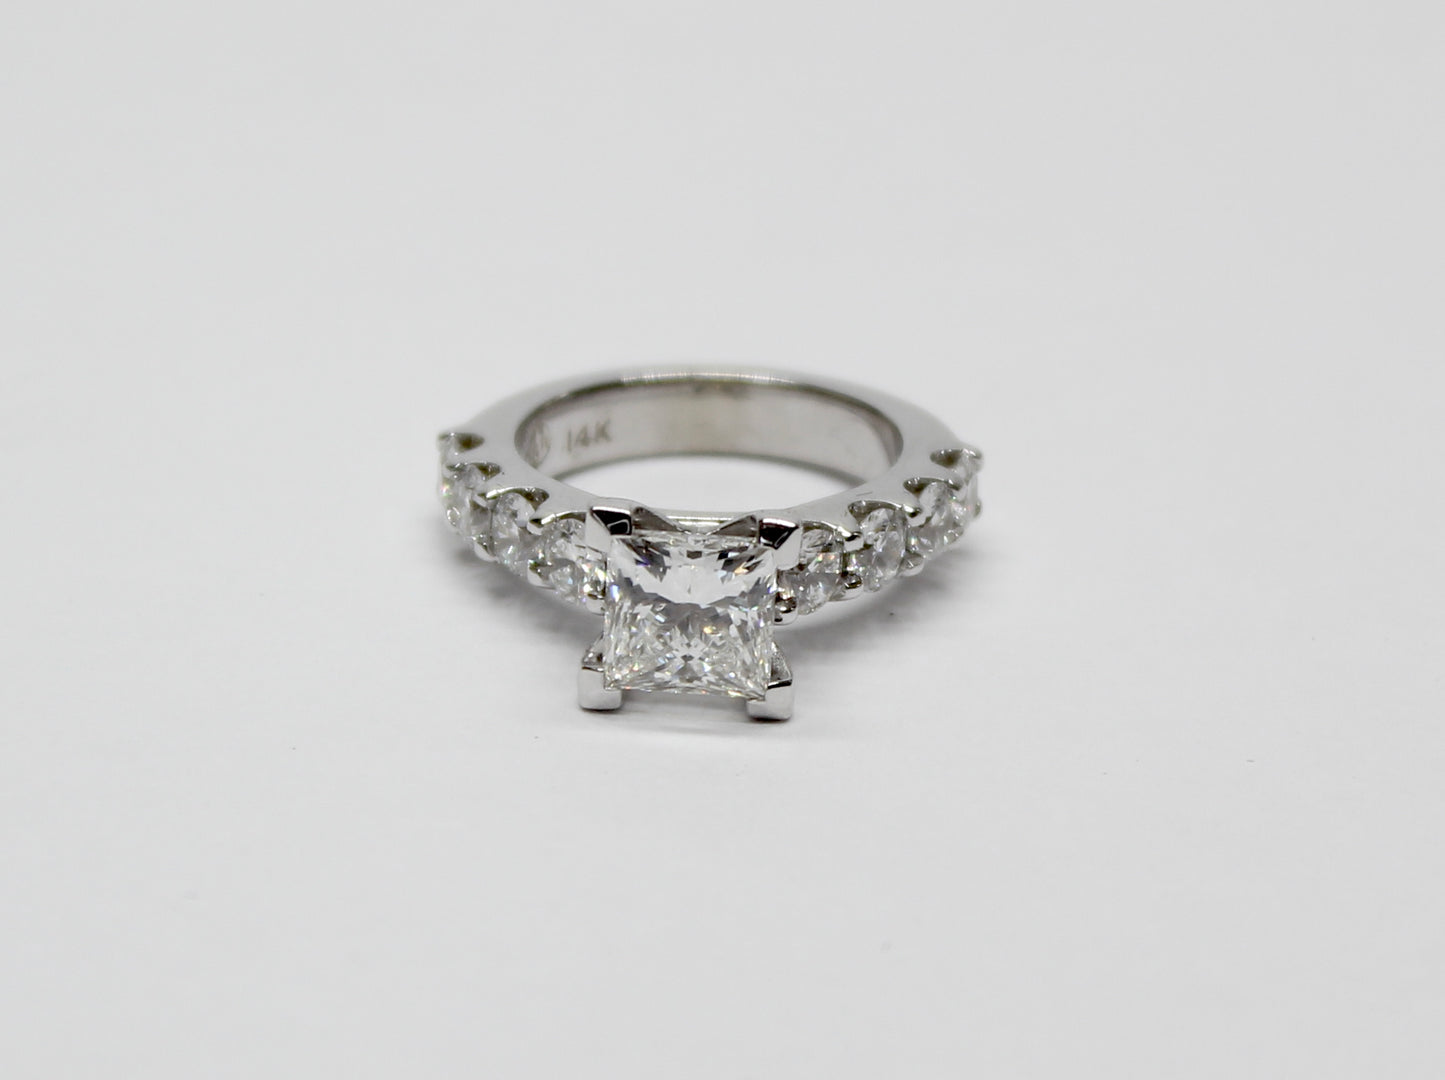 14K White Gold Princess Cut Engagement Ring